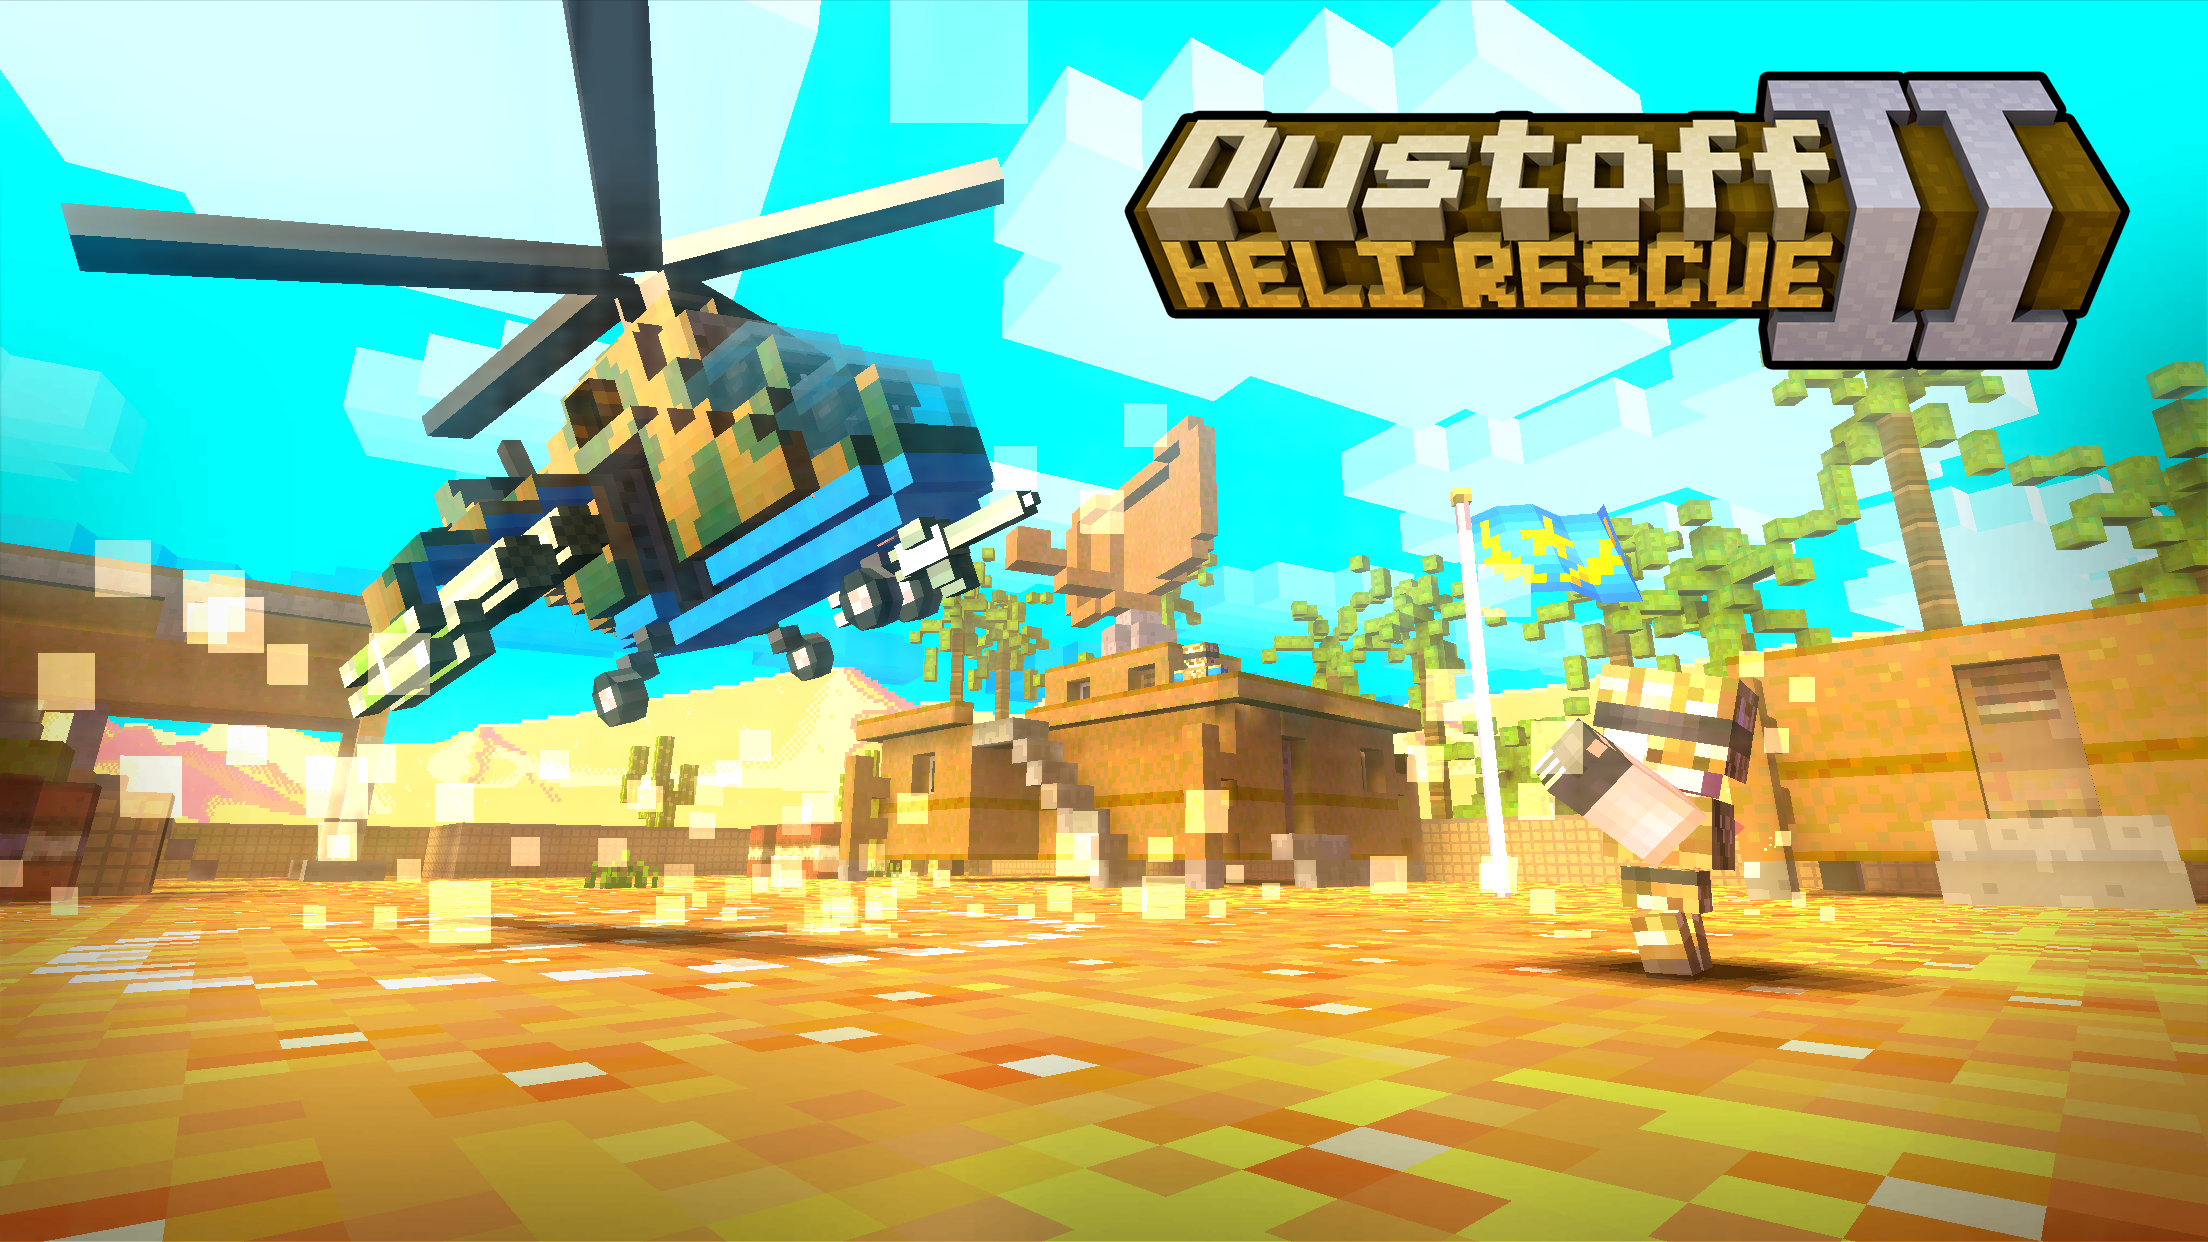 Screenshot 1 of Dustoff Heli Rescue 2: យោធា 